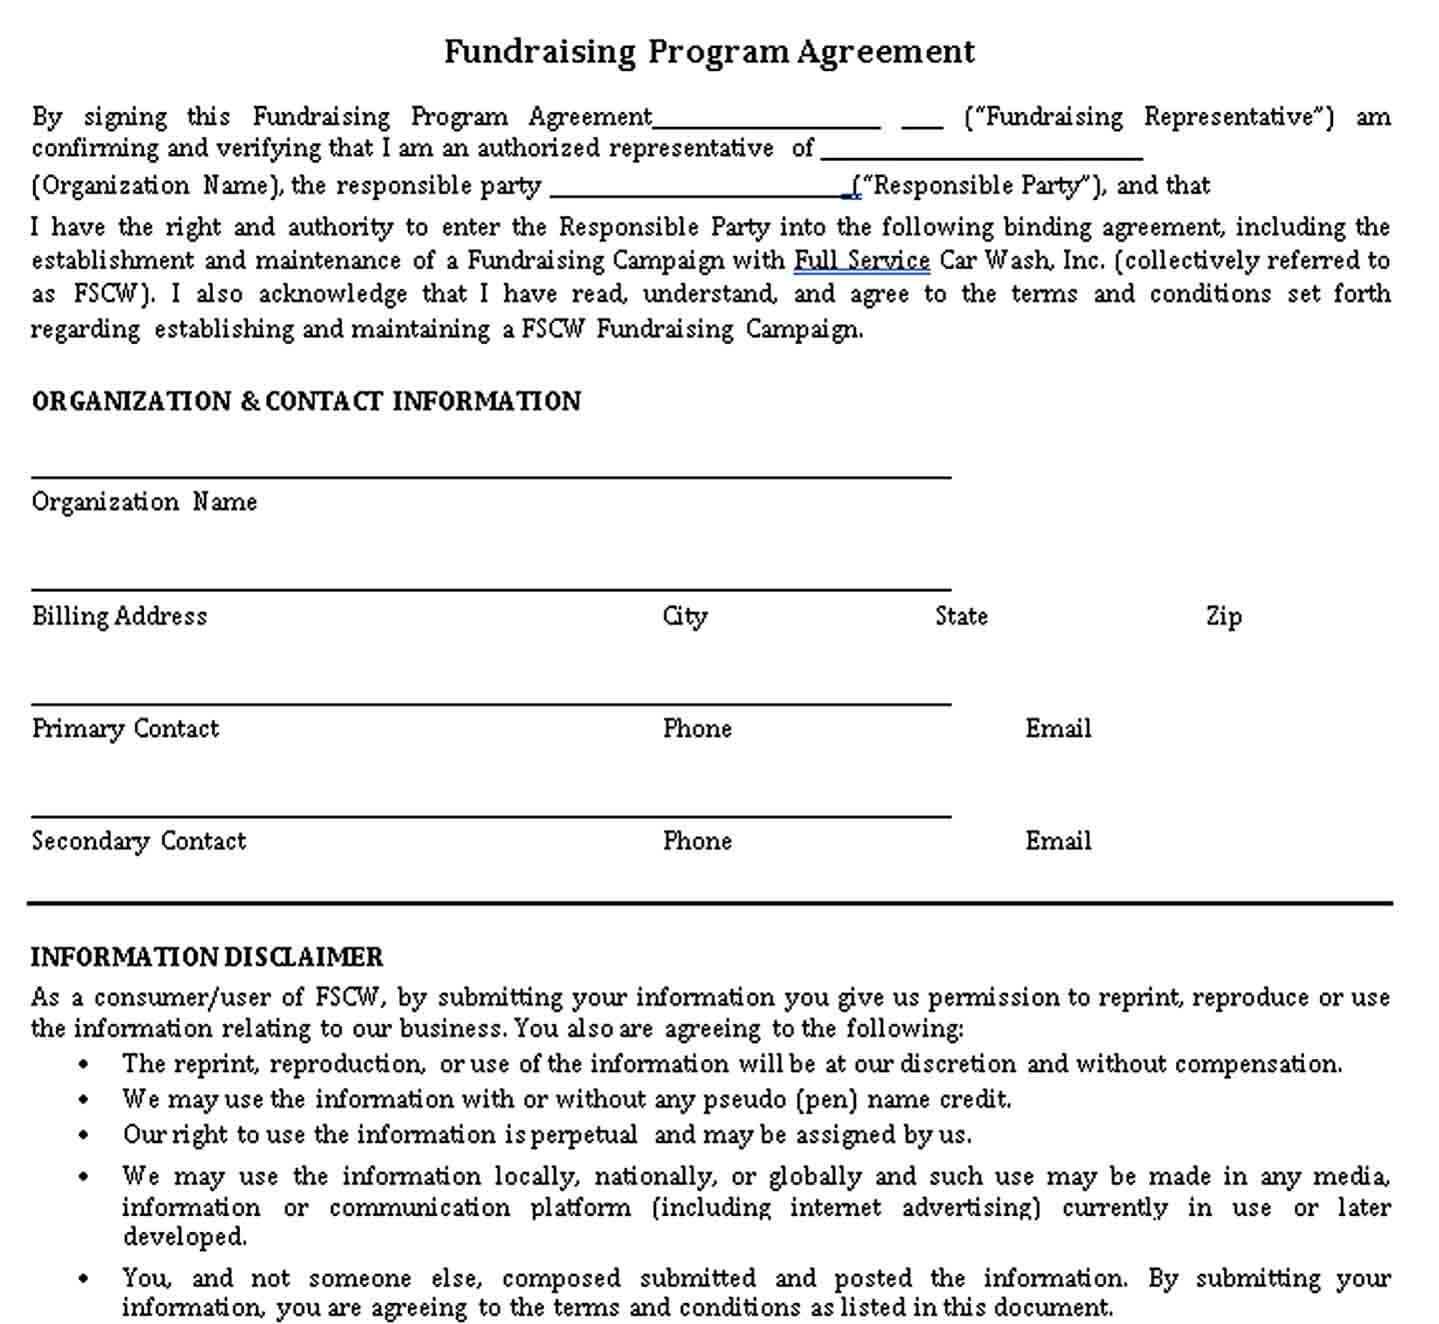 Sample Fundraising Program Agreement Format